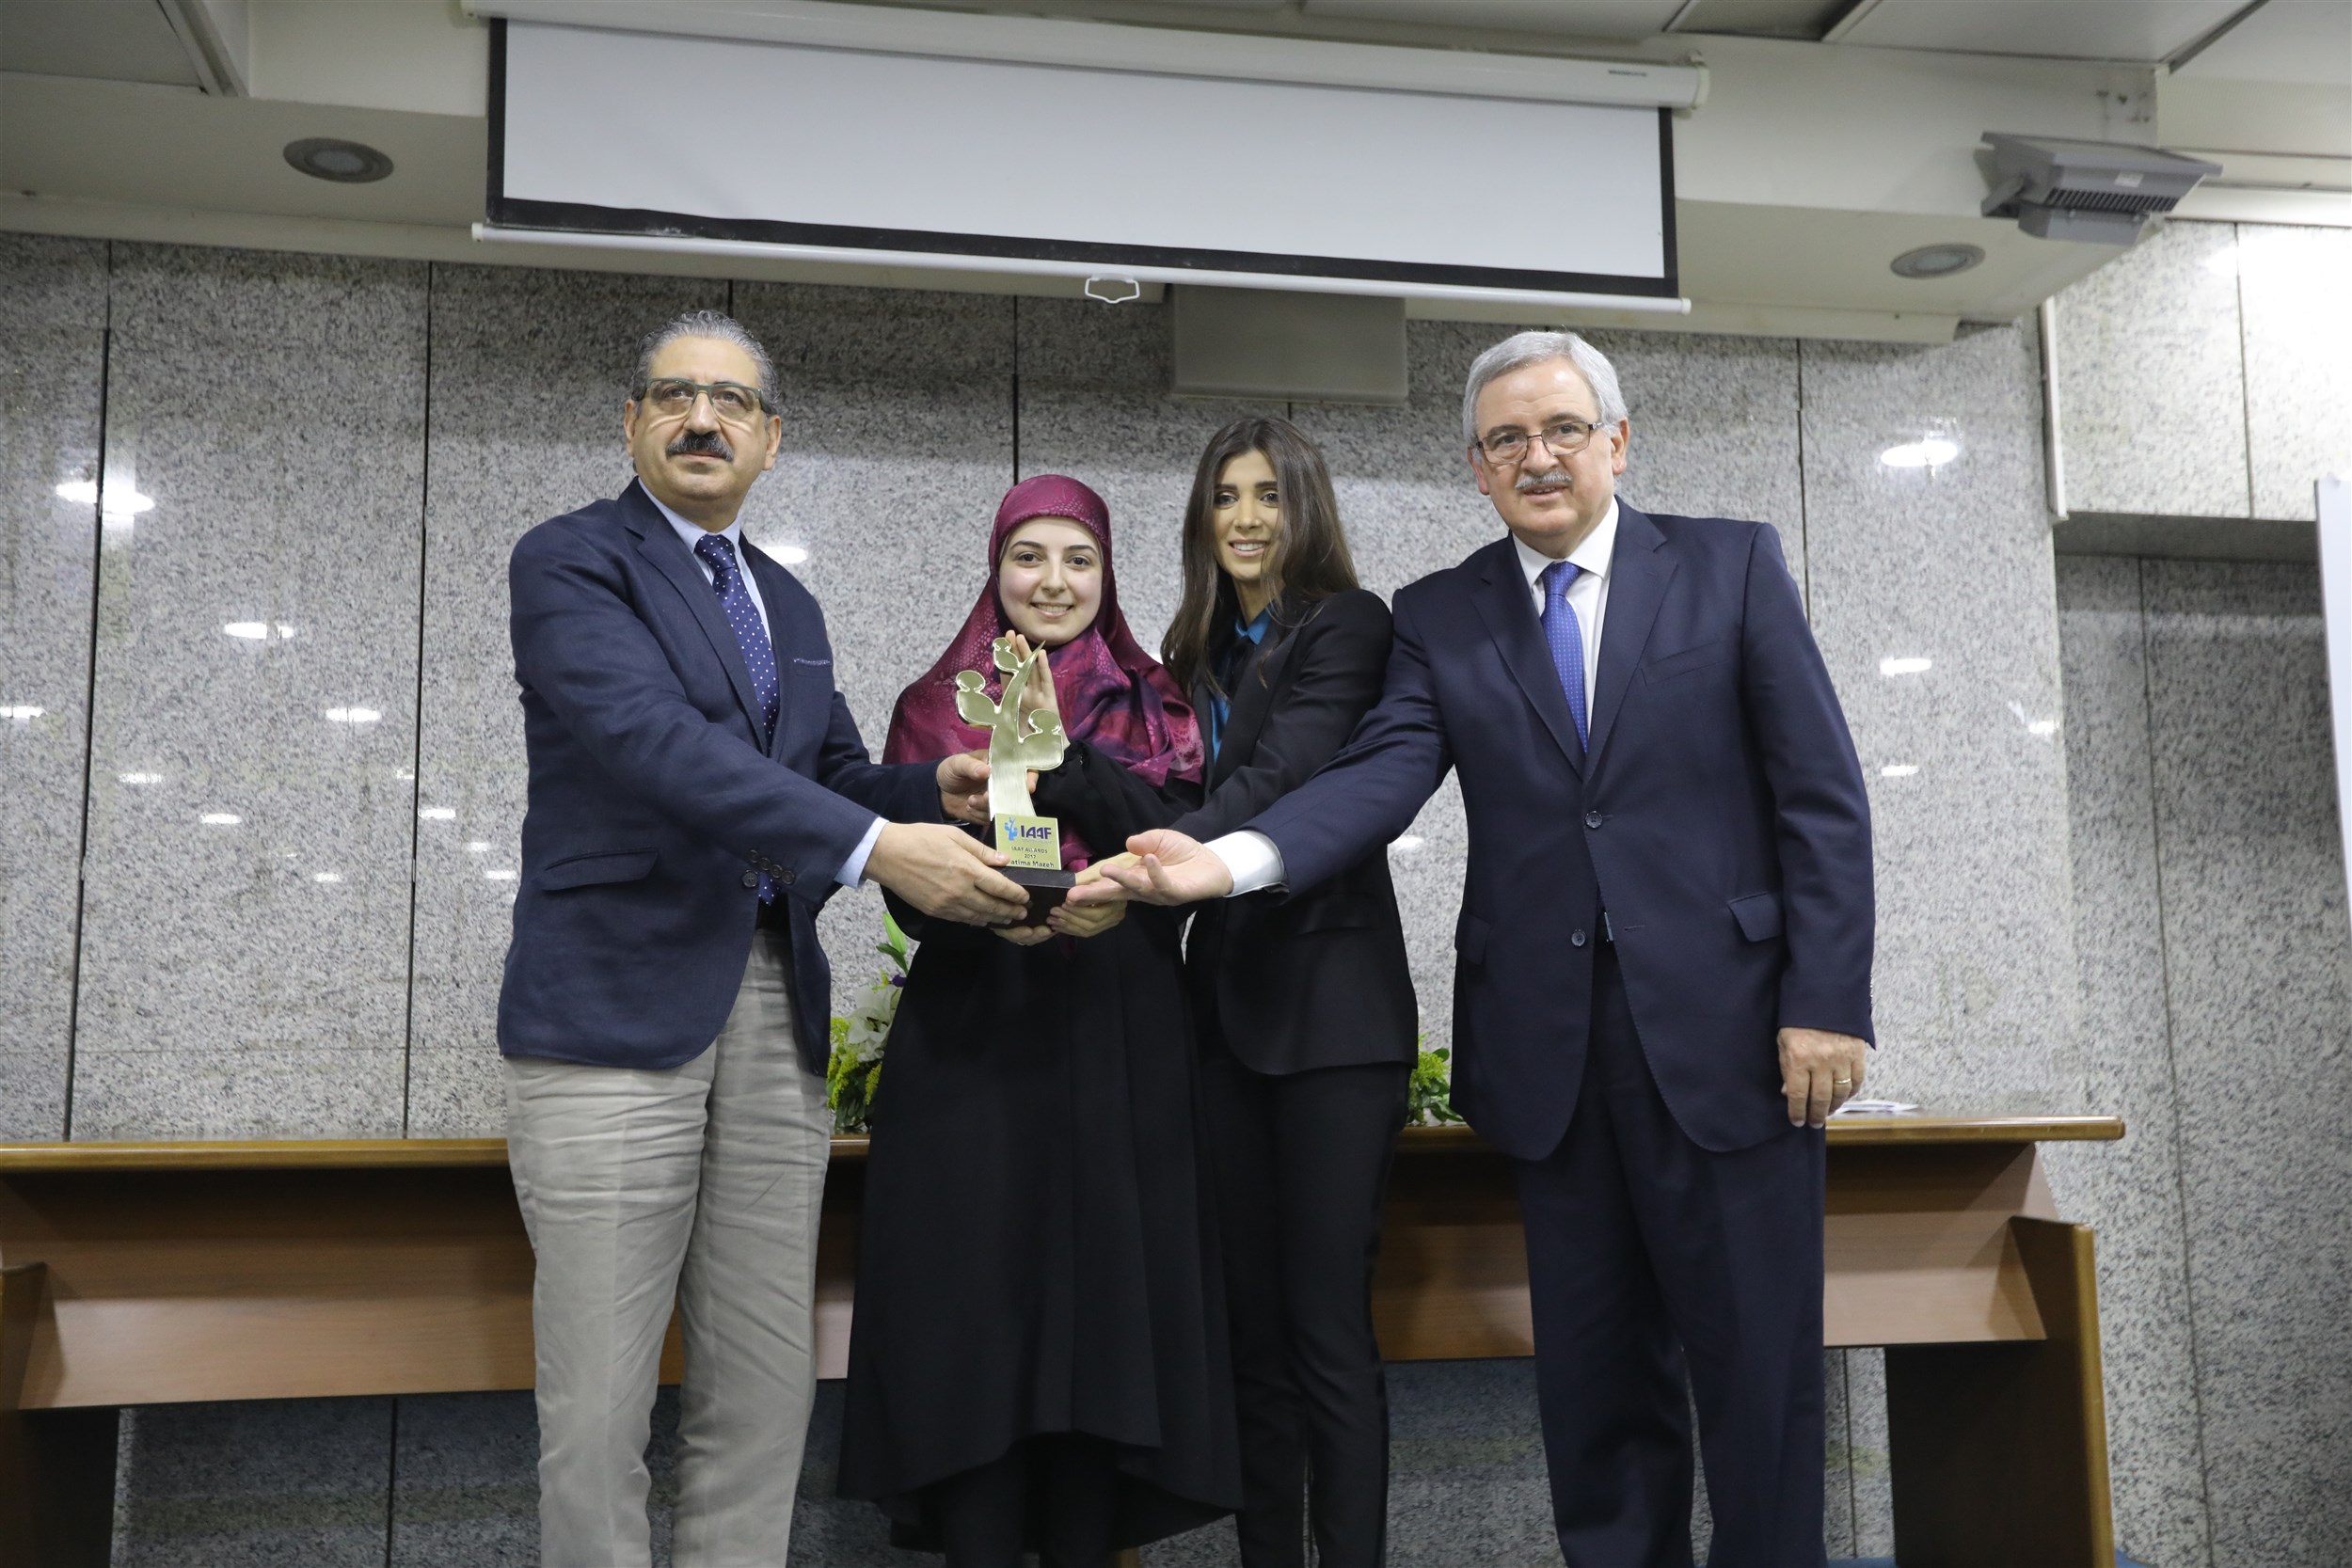 lu winner fatima mazeh receiving her award